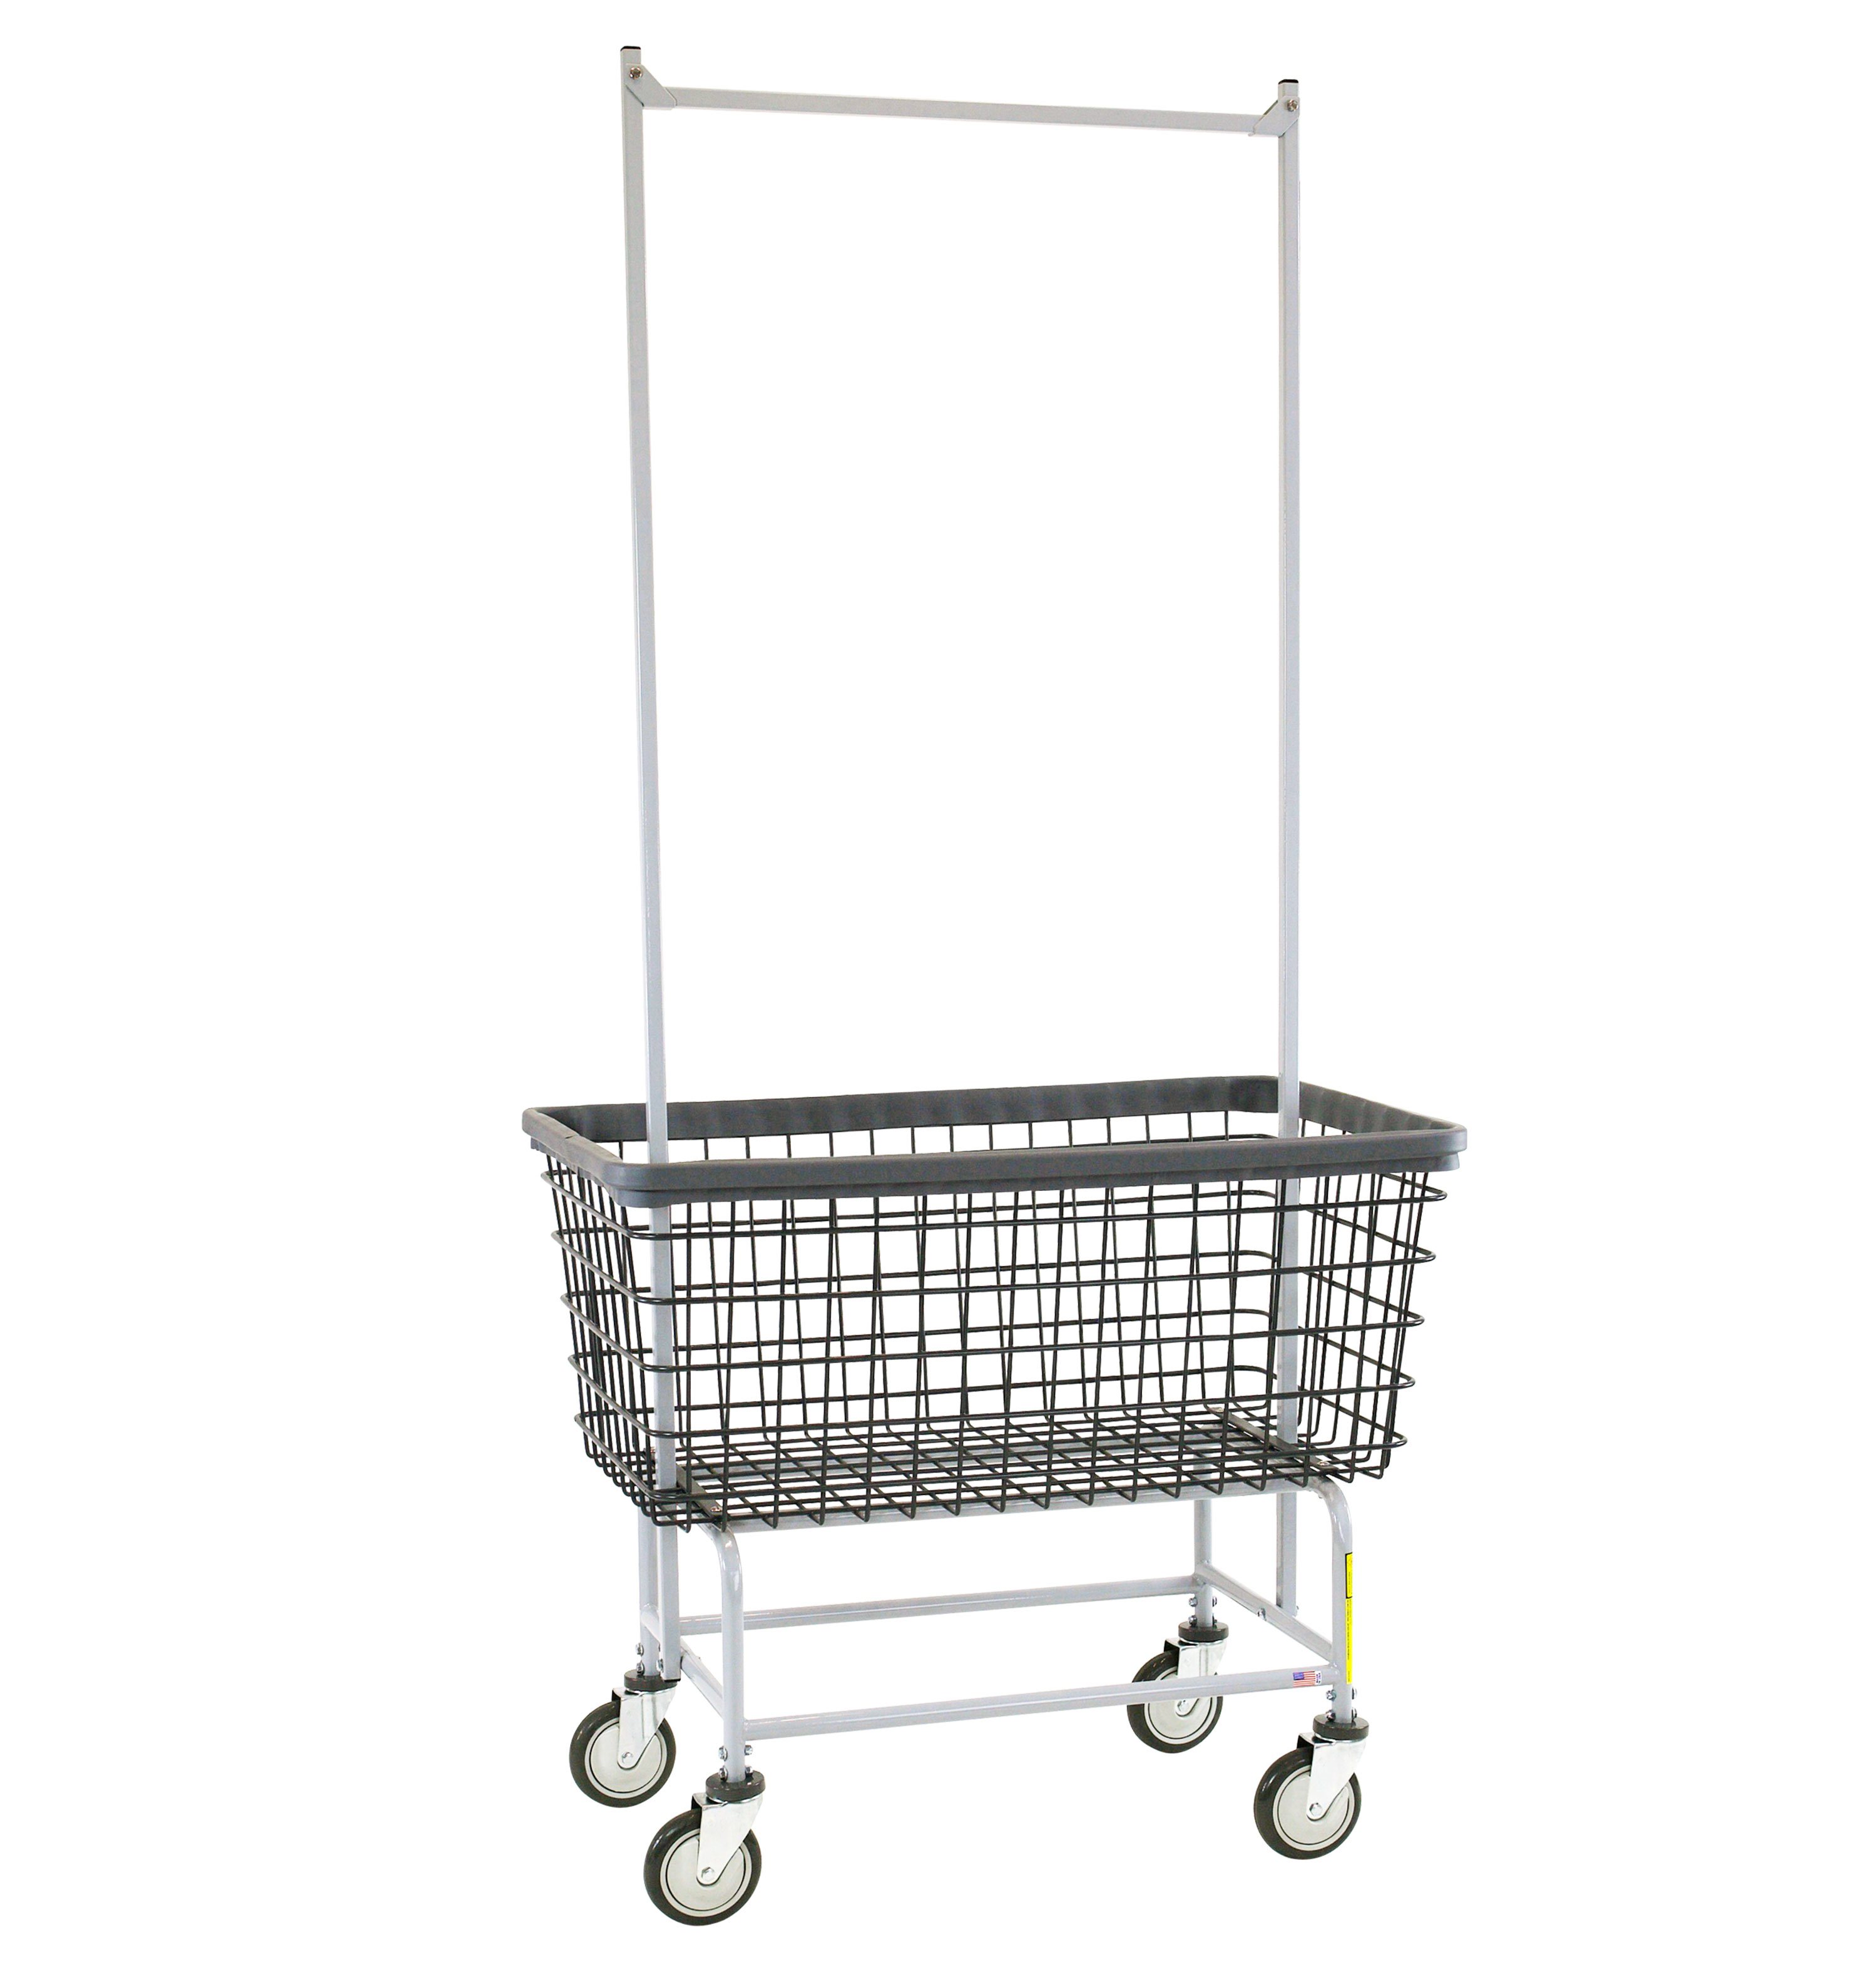 Details about   Heavy duty Garment Organizer Laundry Cart With Storage Basket Double Pole Rack 